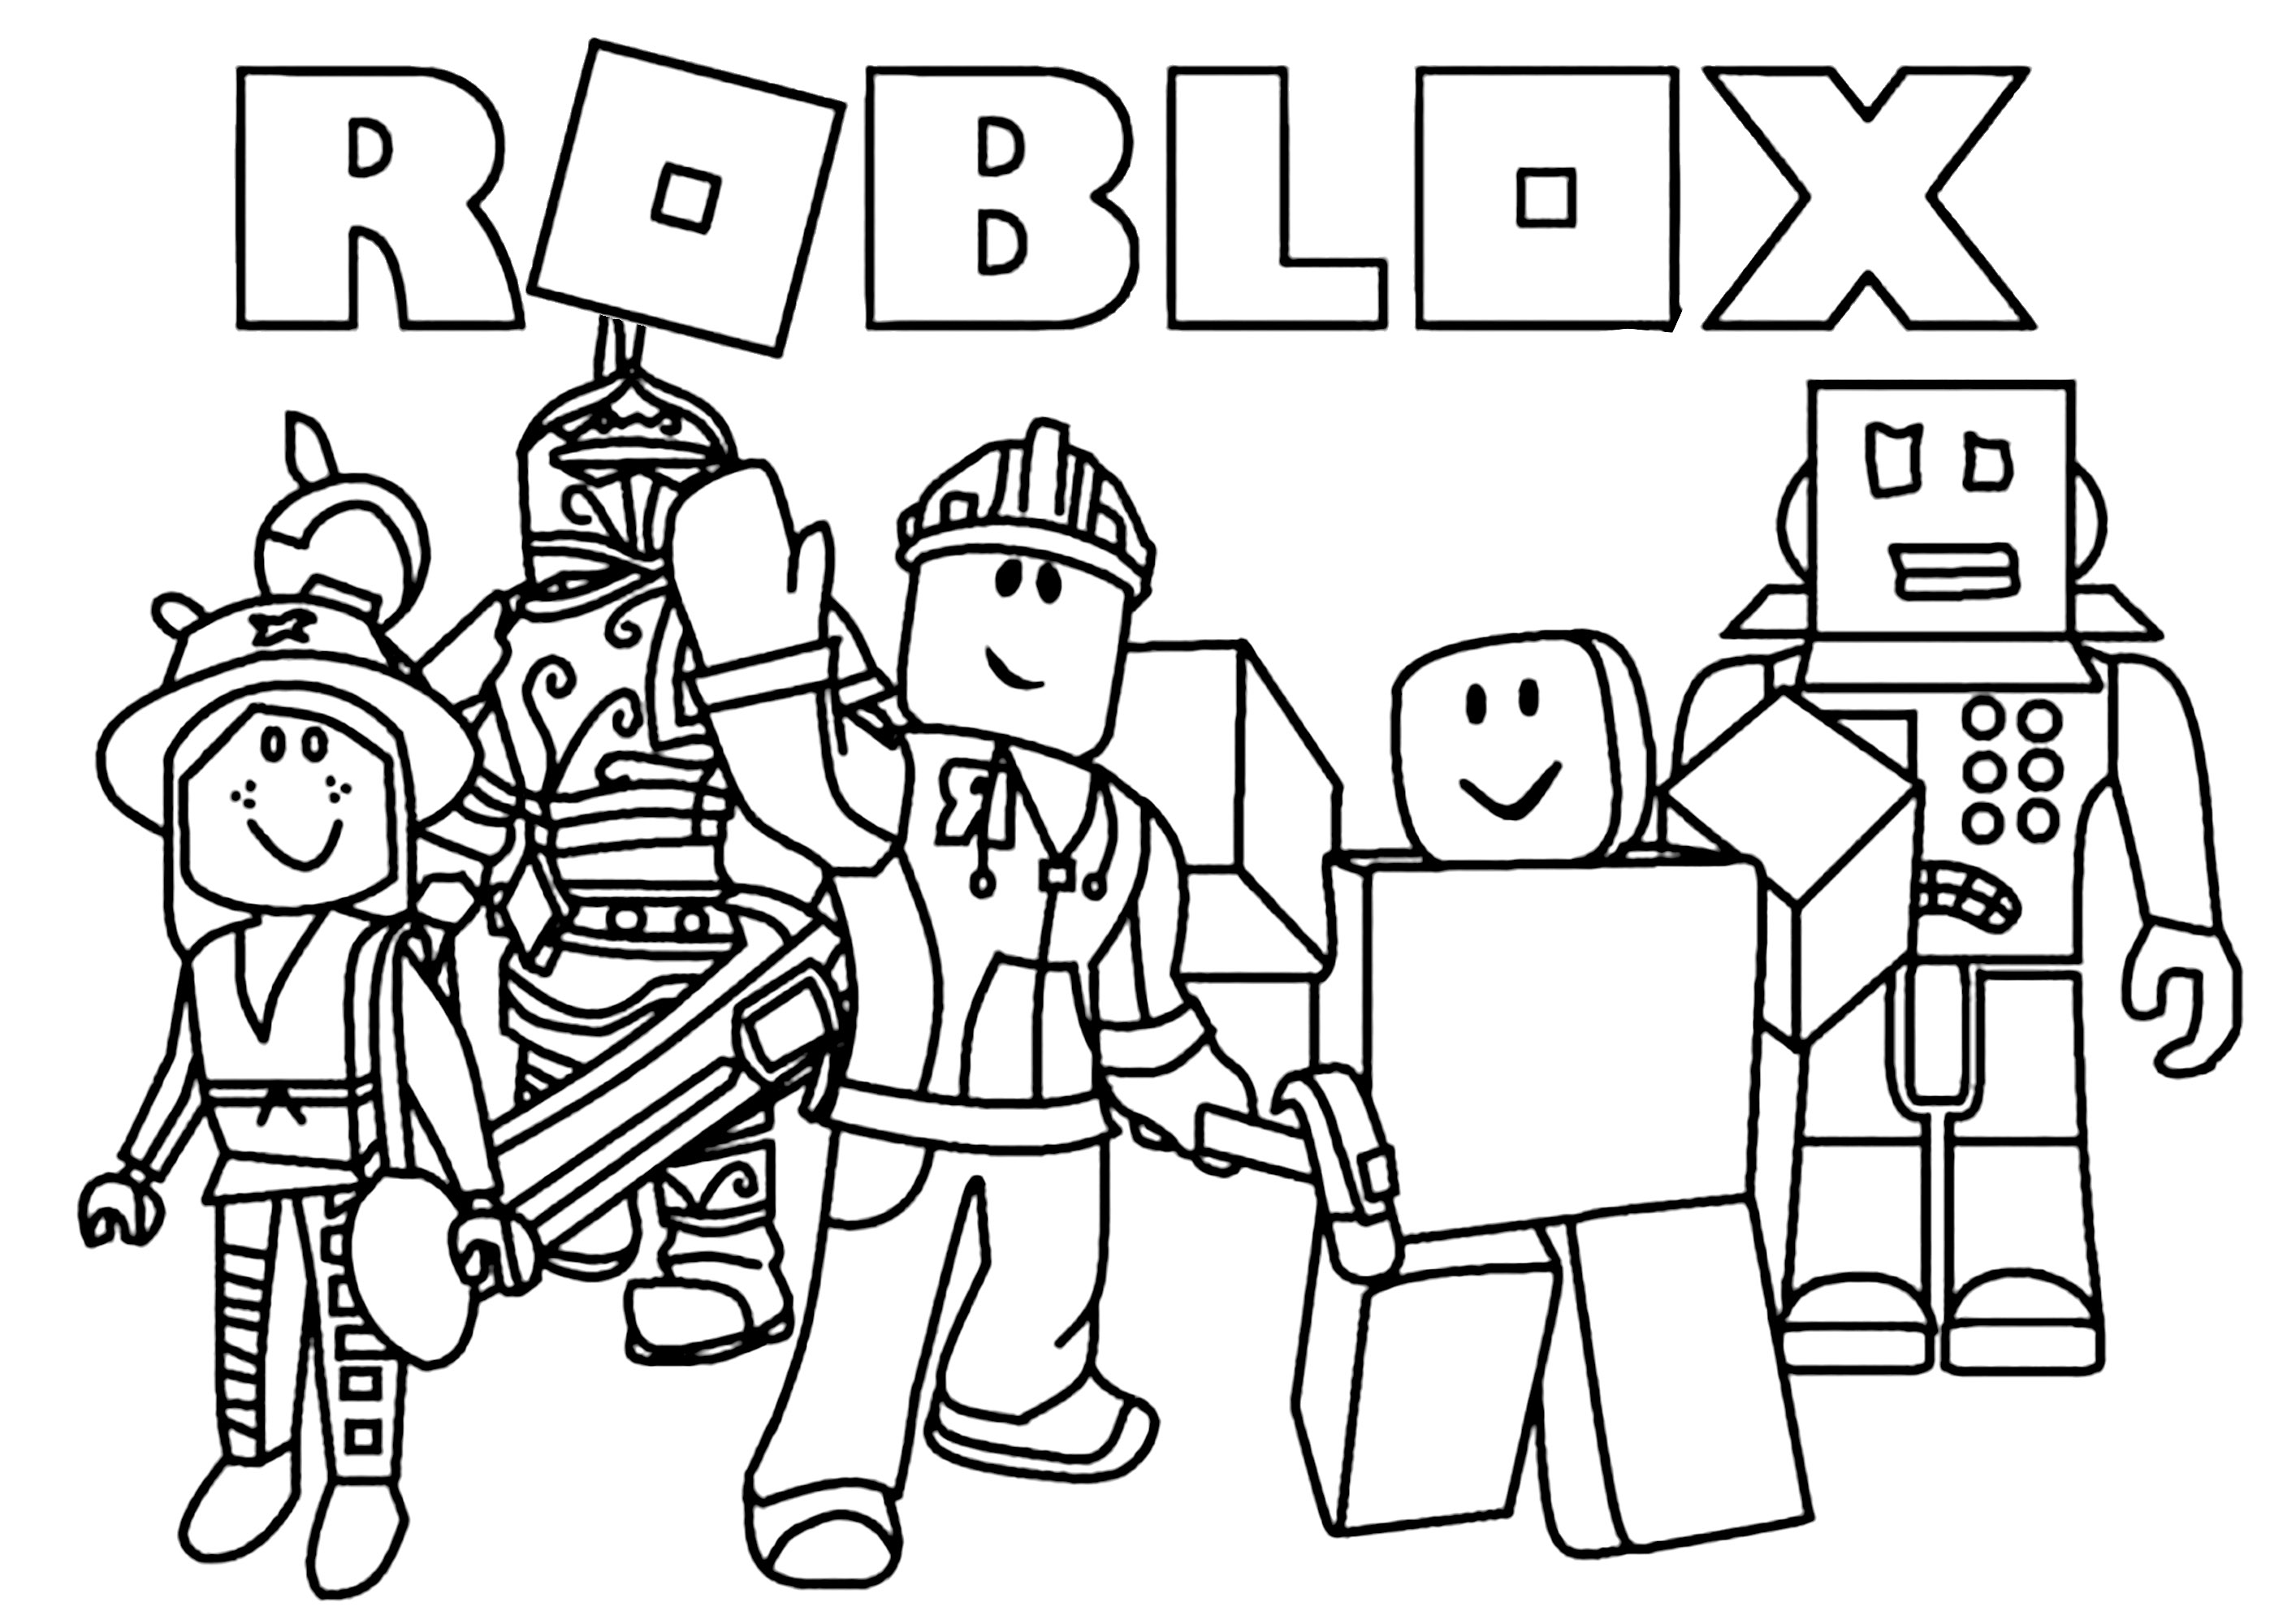 Topic · Roblox new logo ·